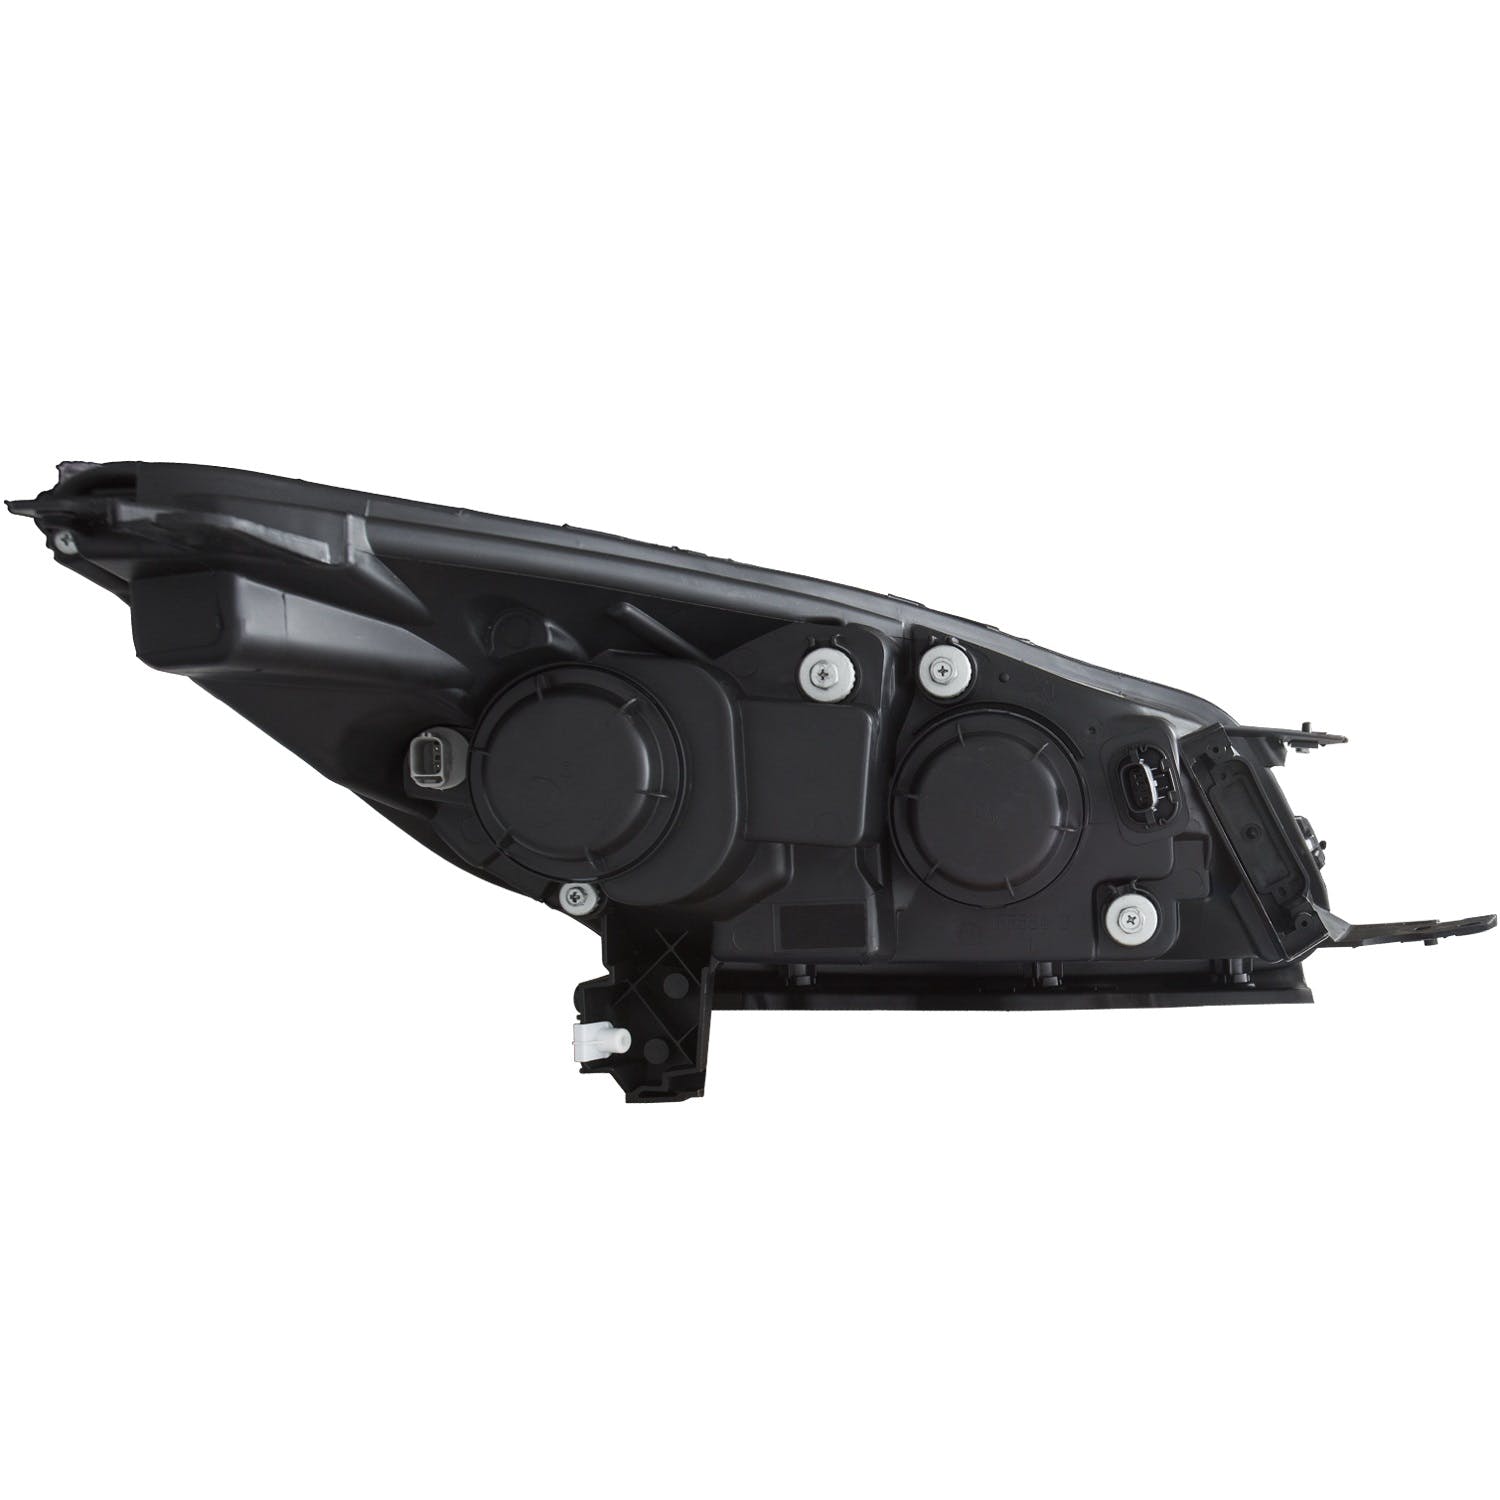 AnzoUSA 111324 Projector Headlights with U-Bar Black